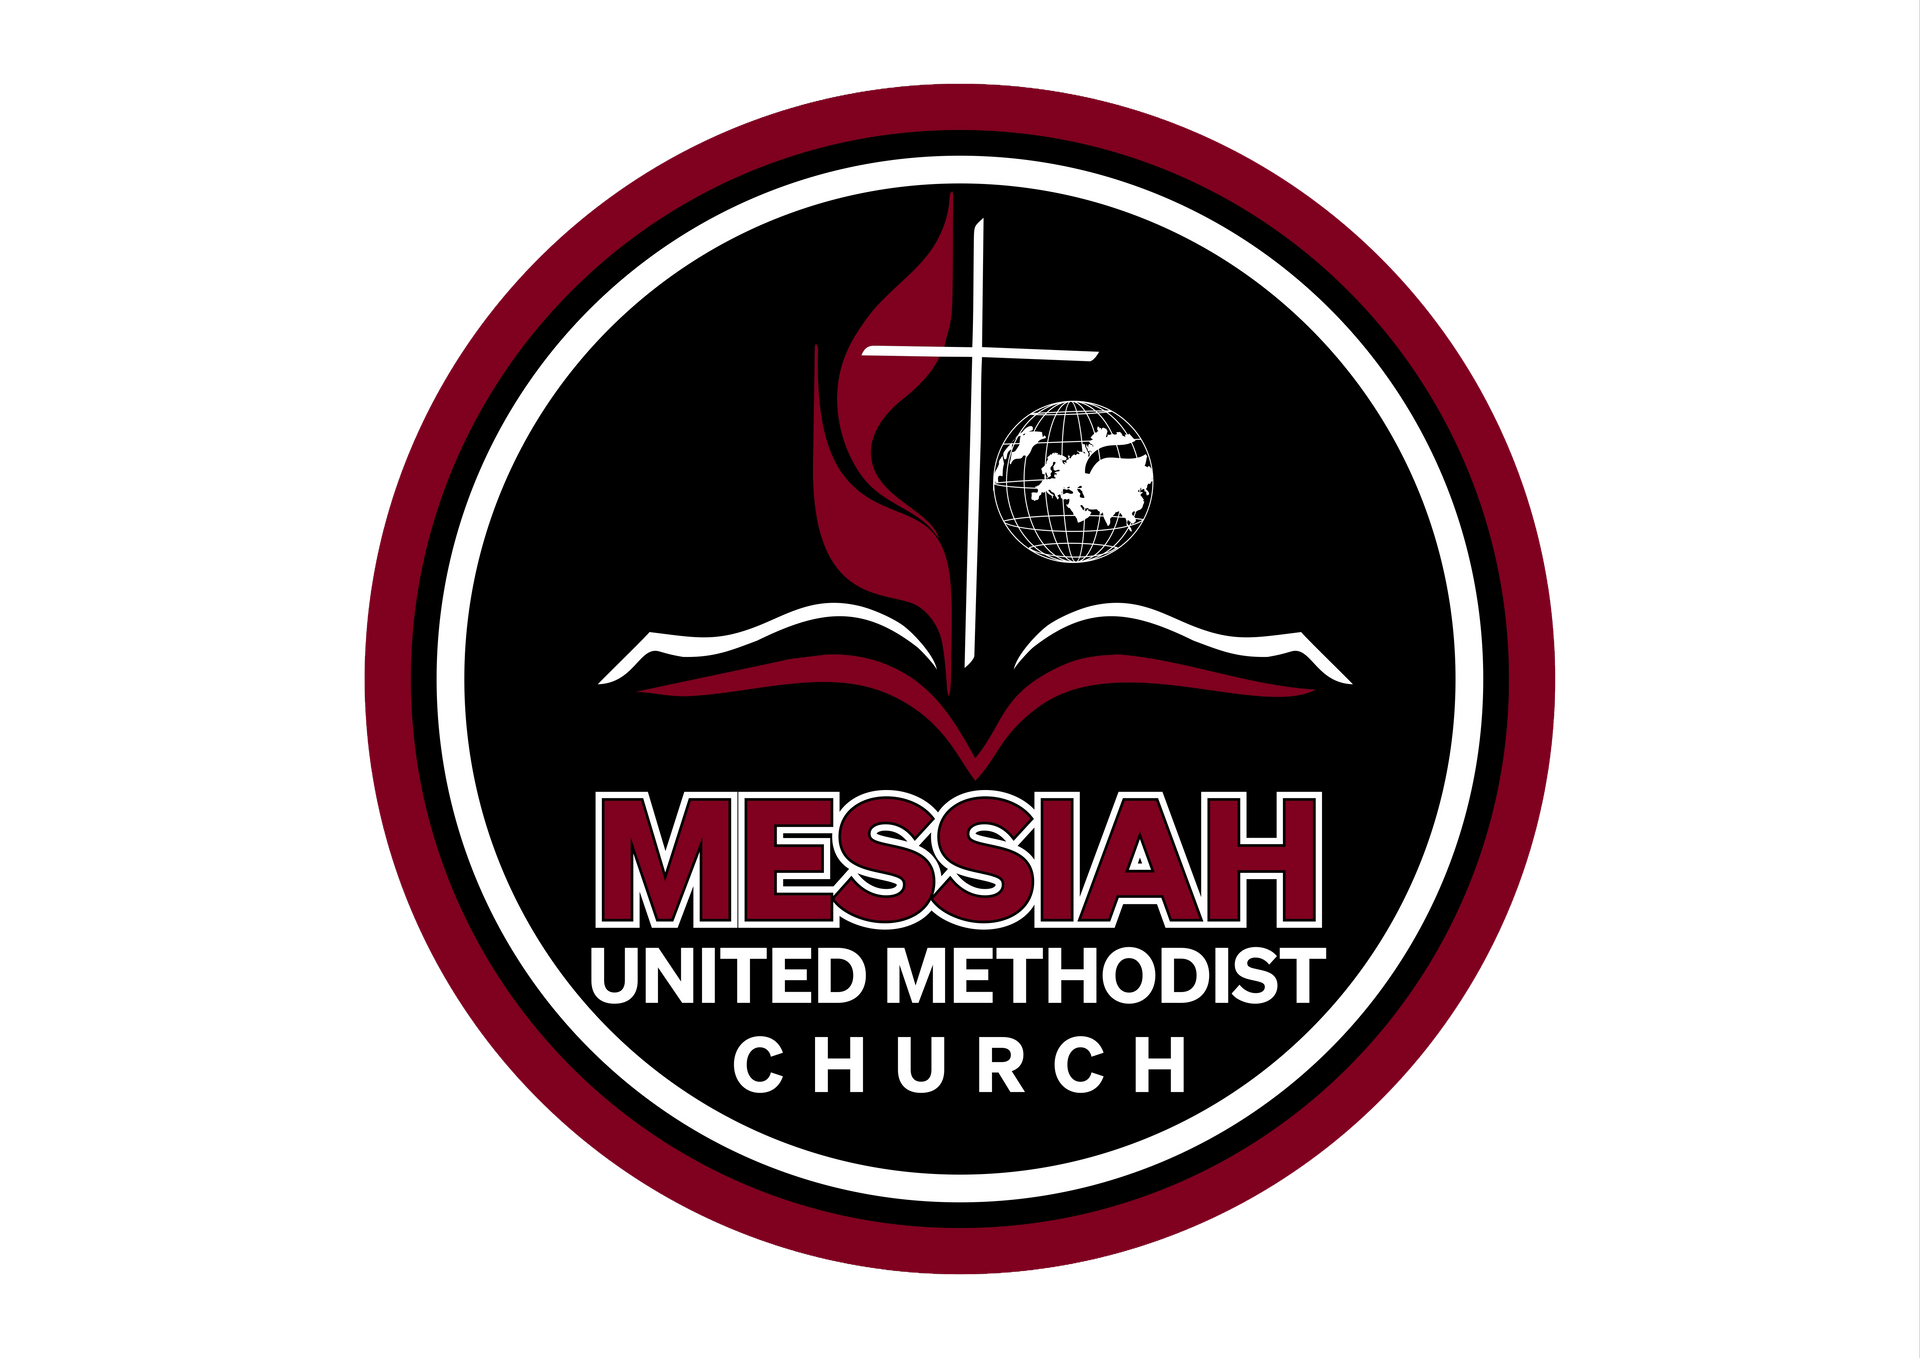 Messiah United Methodist Church Logo